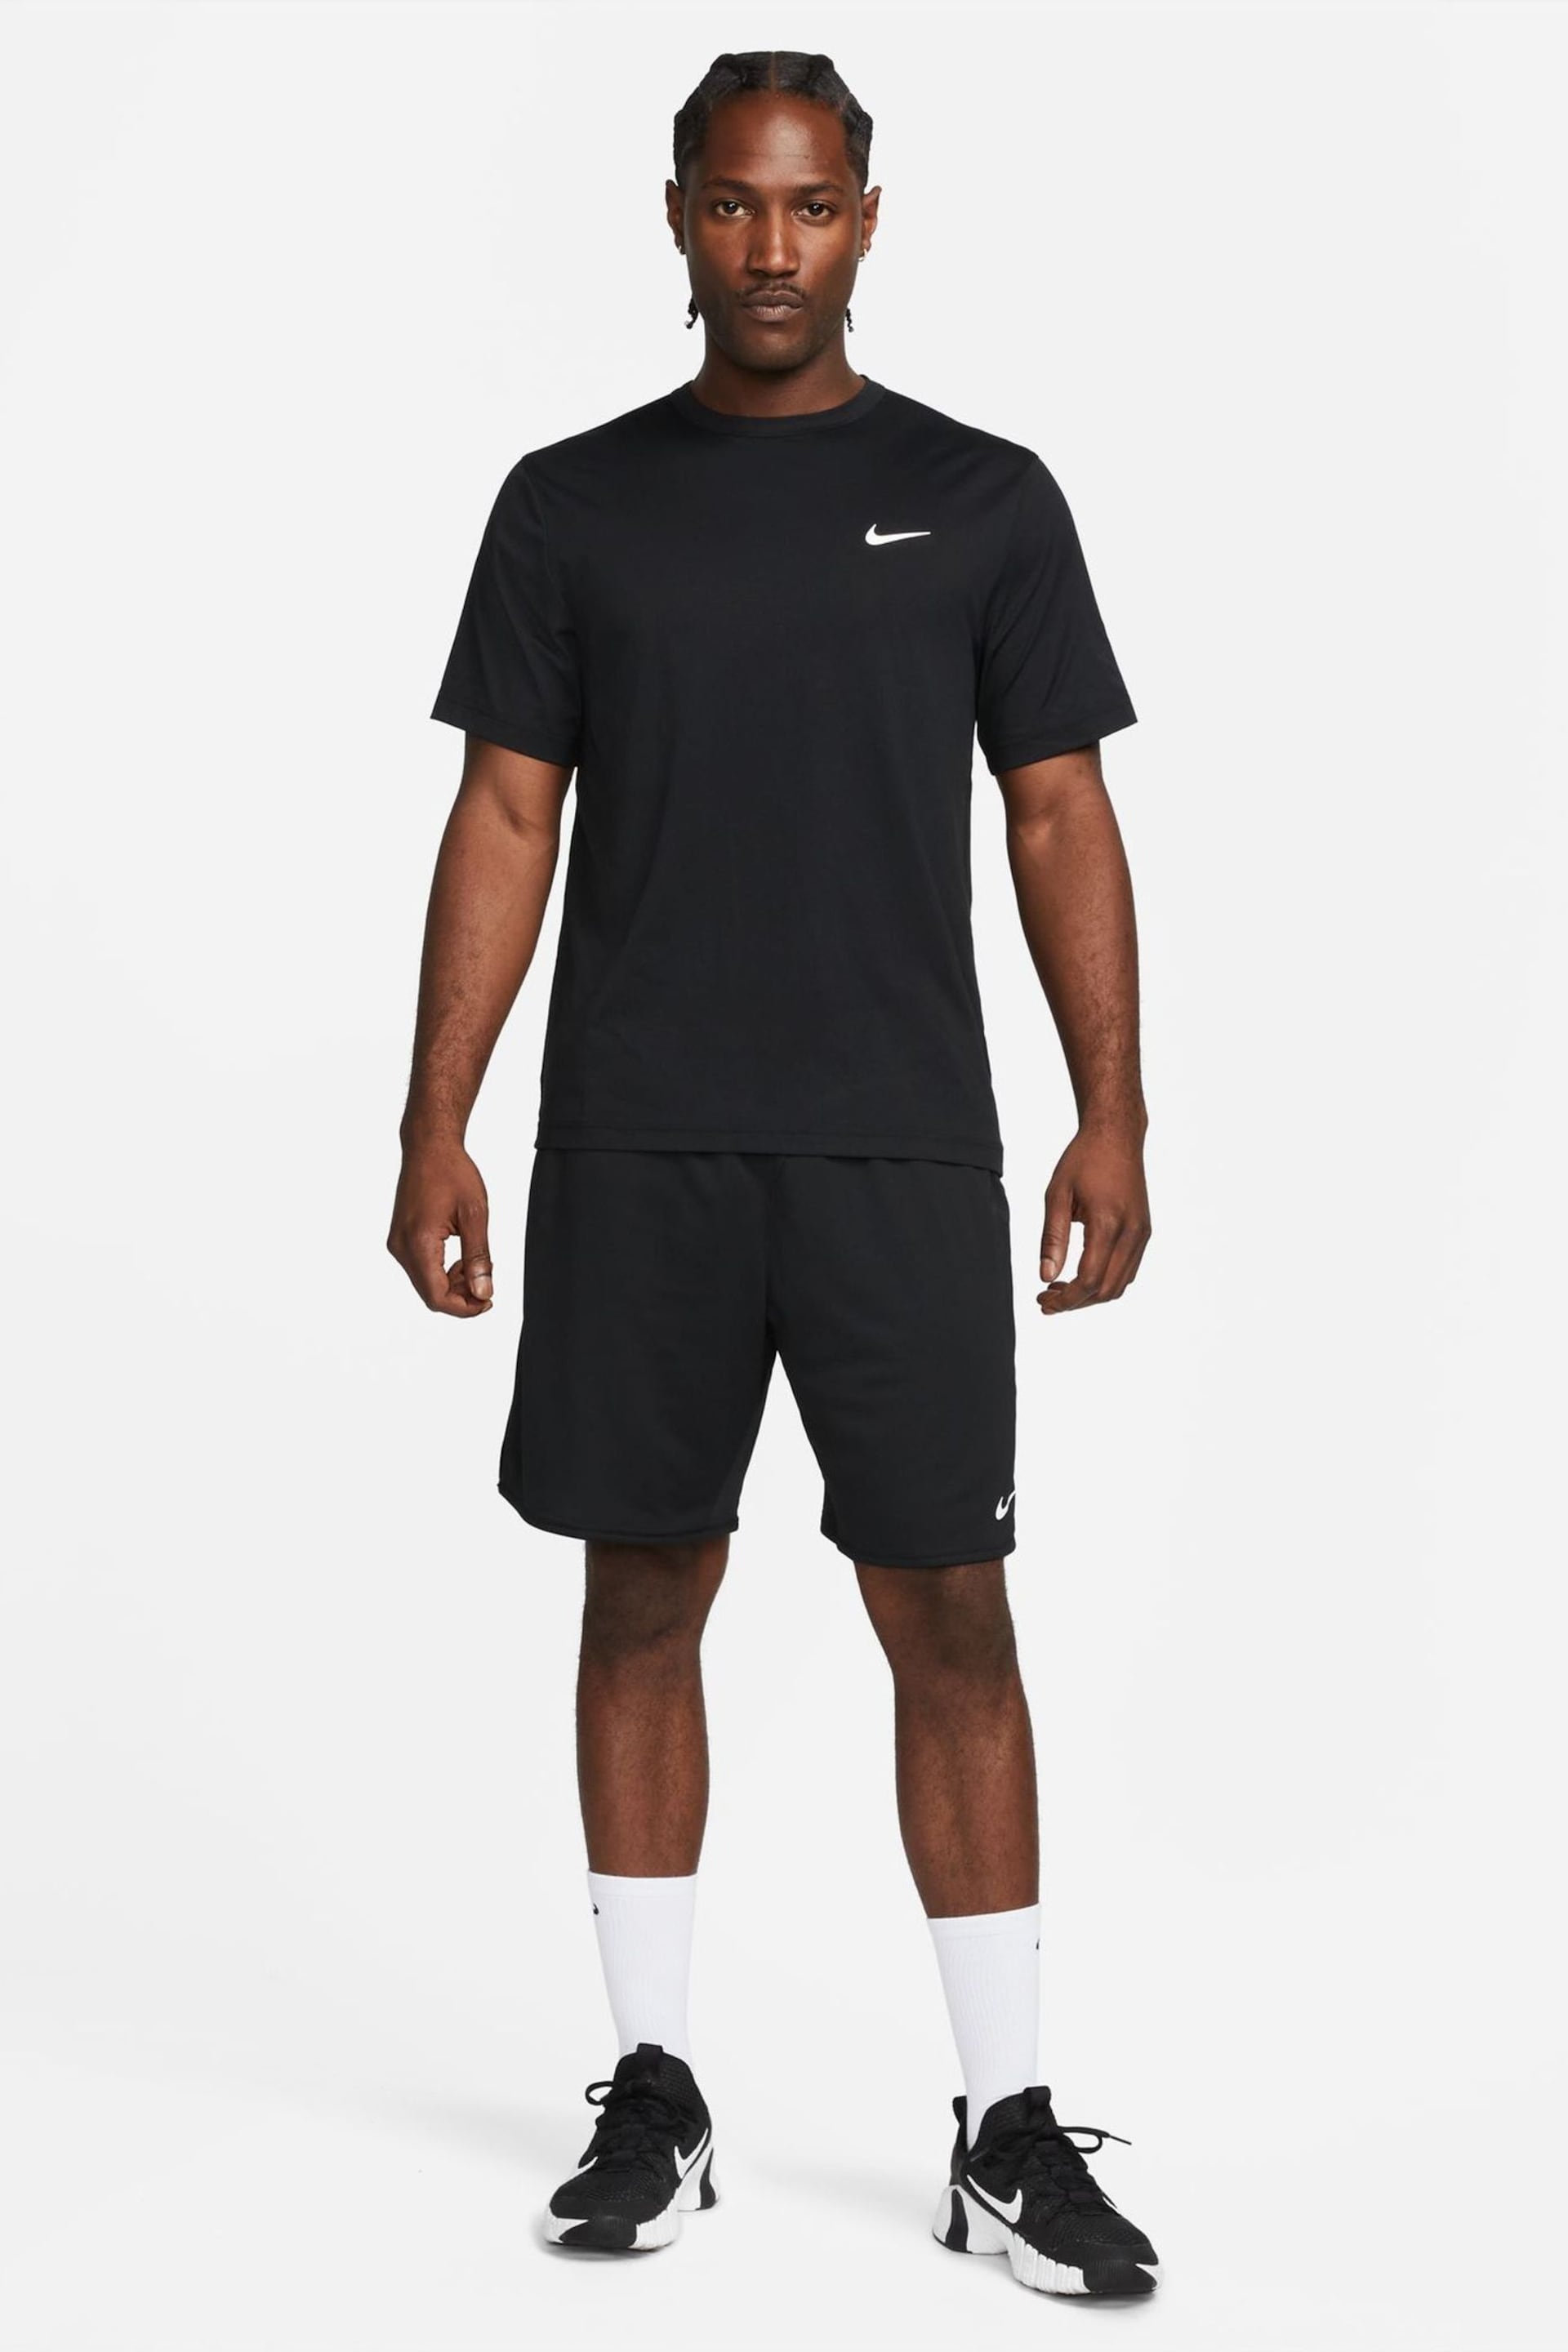 Nike Black Dri-FIT Hyverse Training T-Shirt - Image 3 of 5